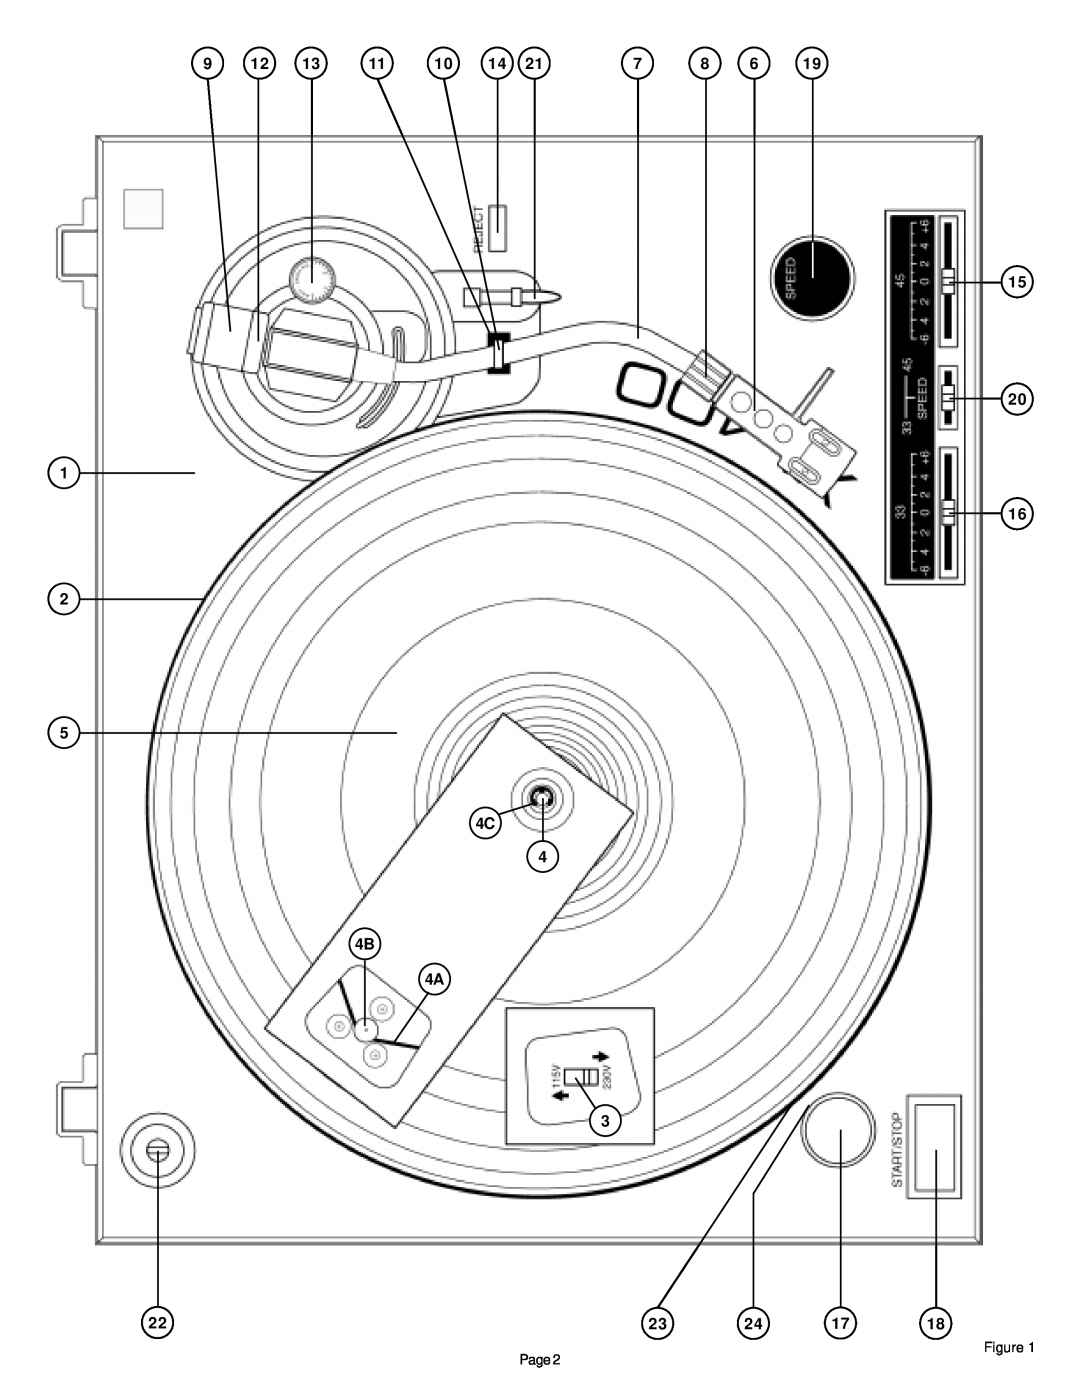 Gemini XL-100 manual 15 20 1 16 2 5 4C 4 4B 4A, Figure Page 